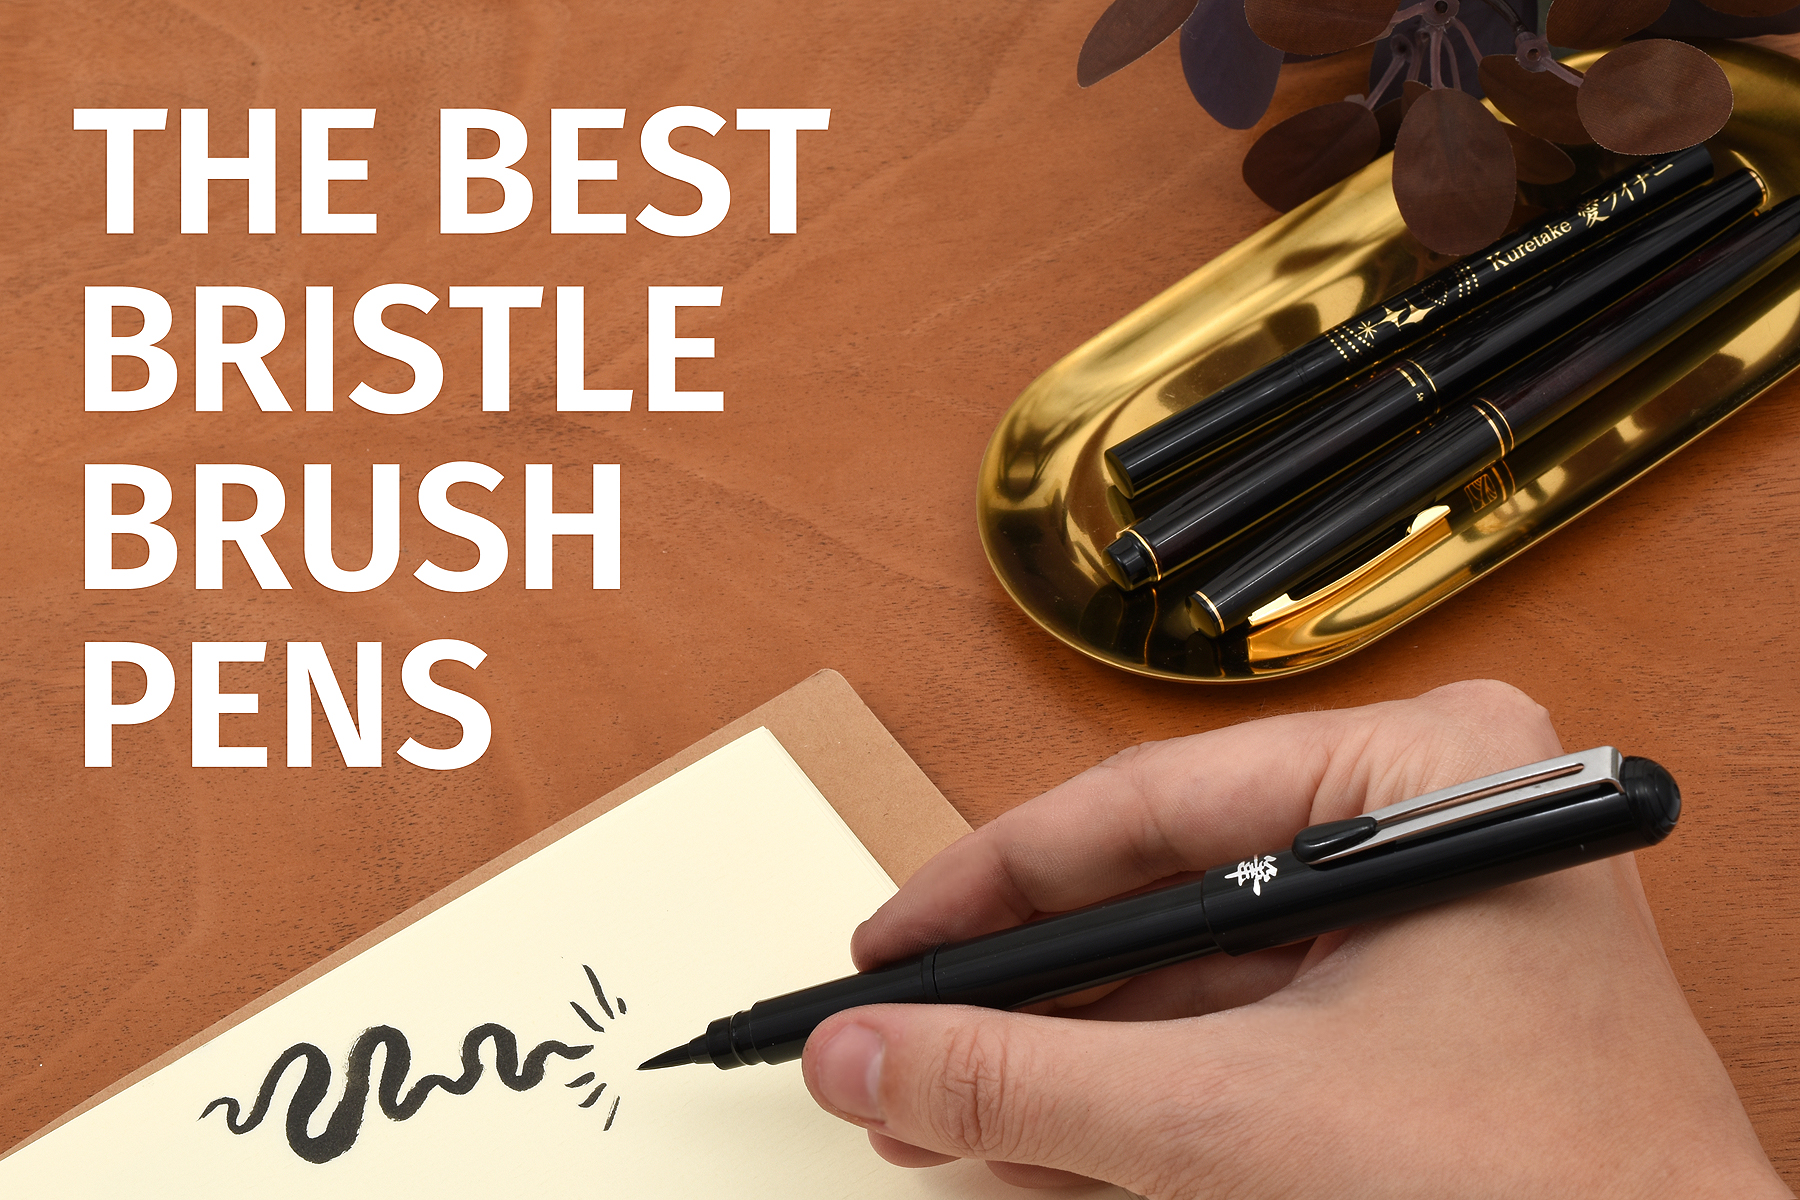 The Best Bristle Brush Pens